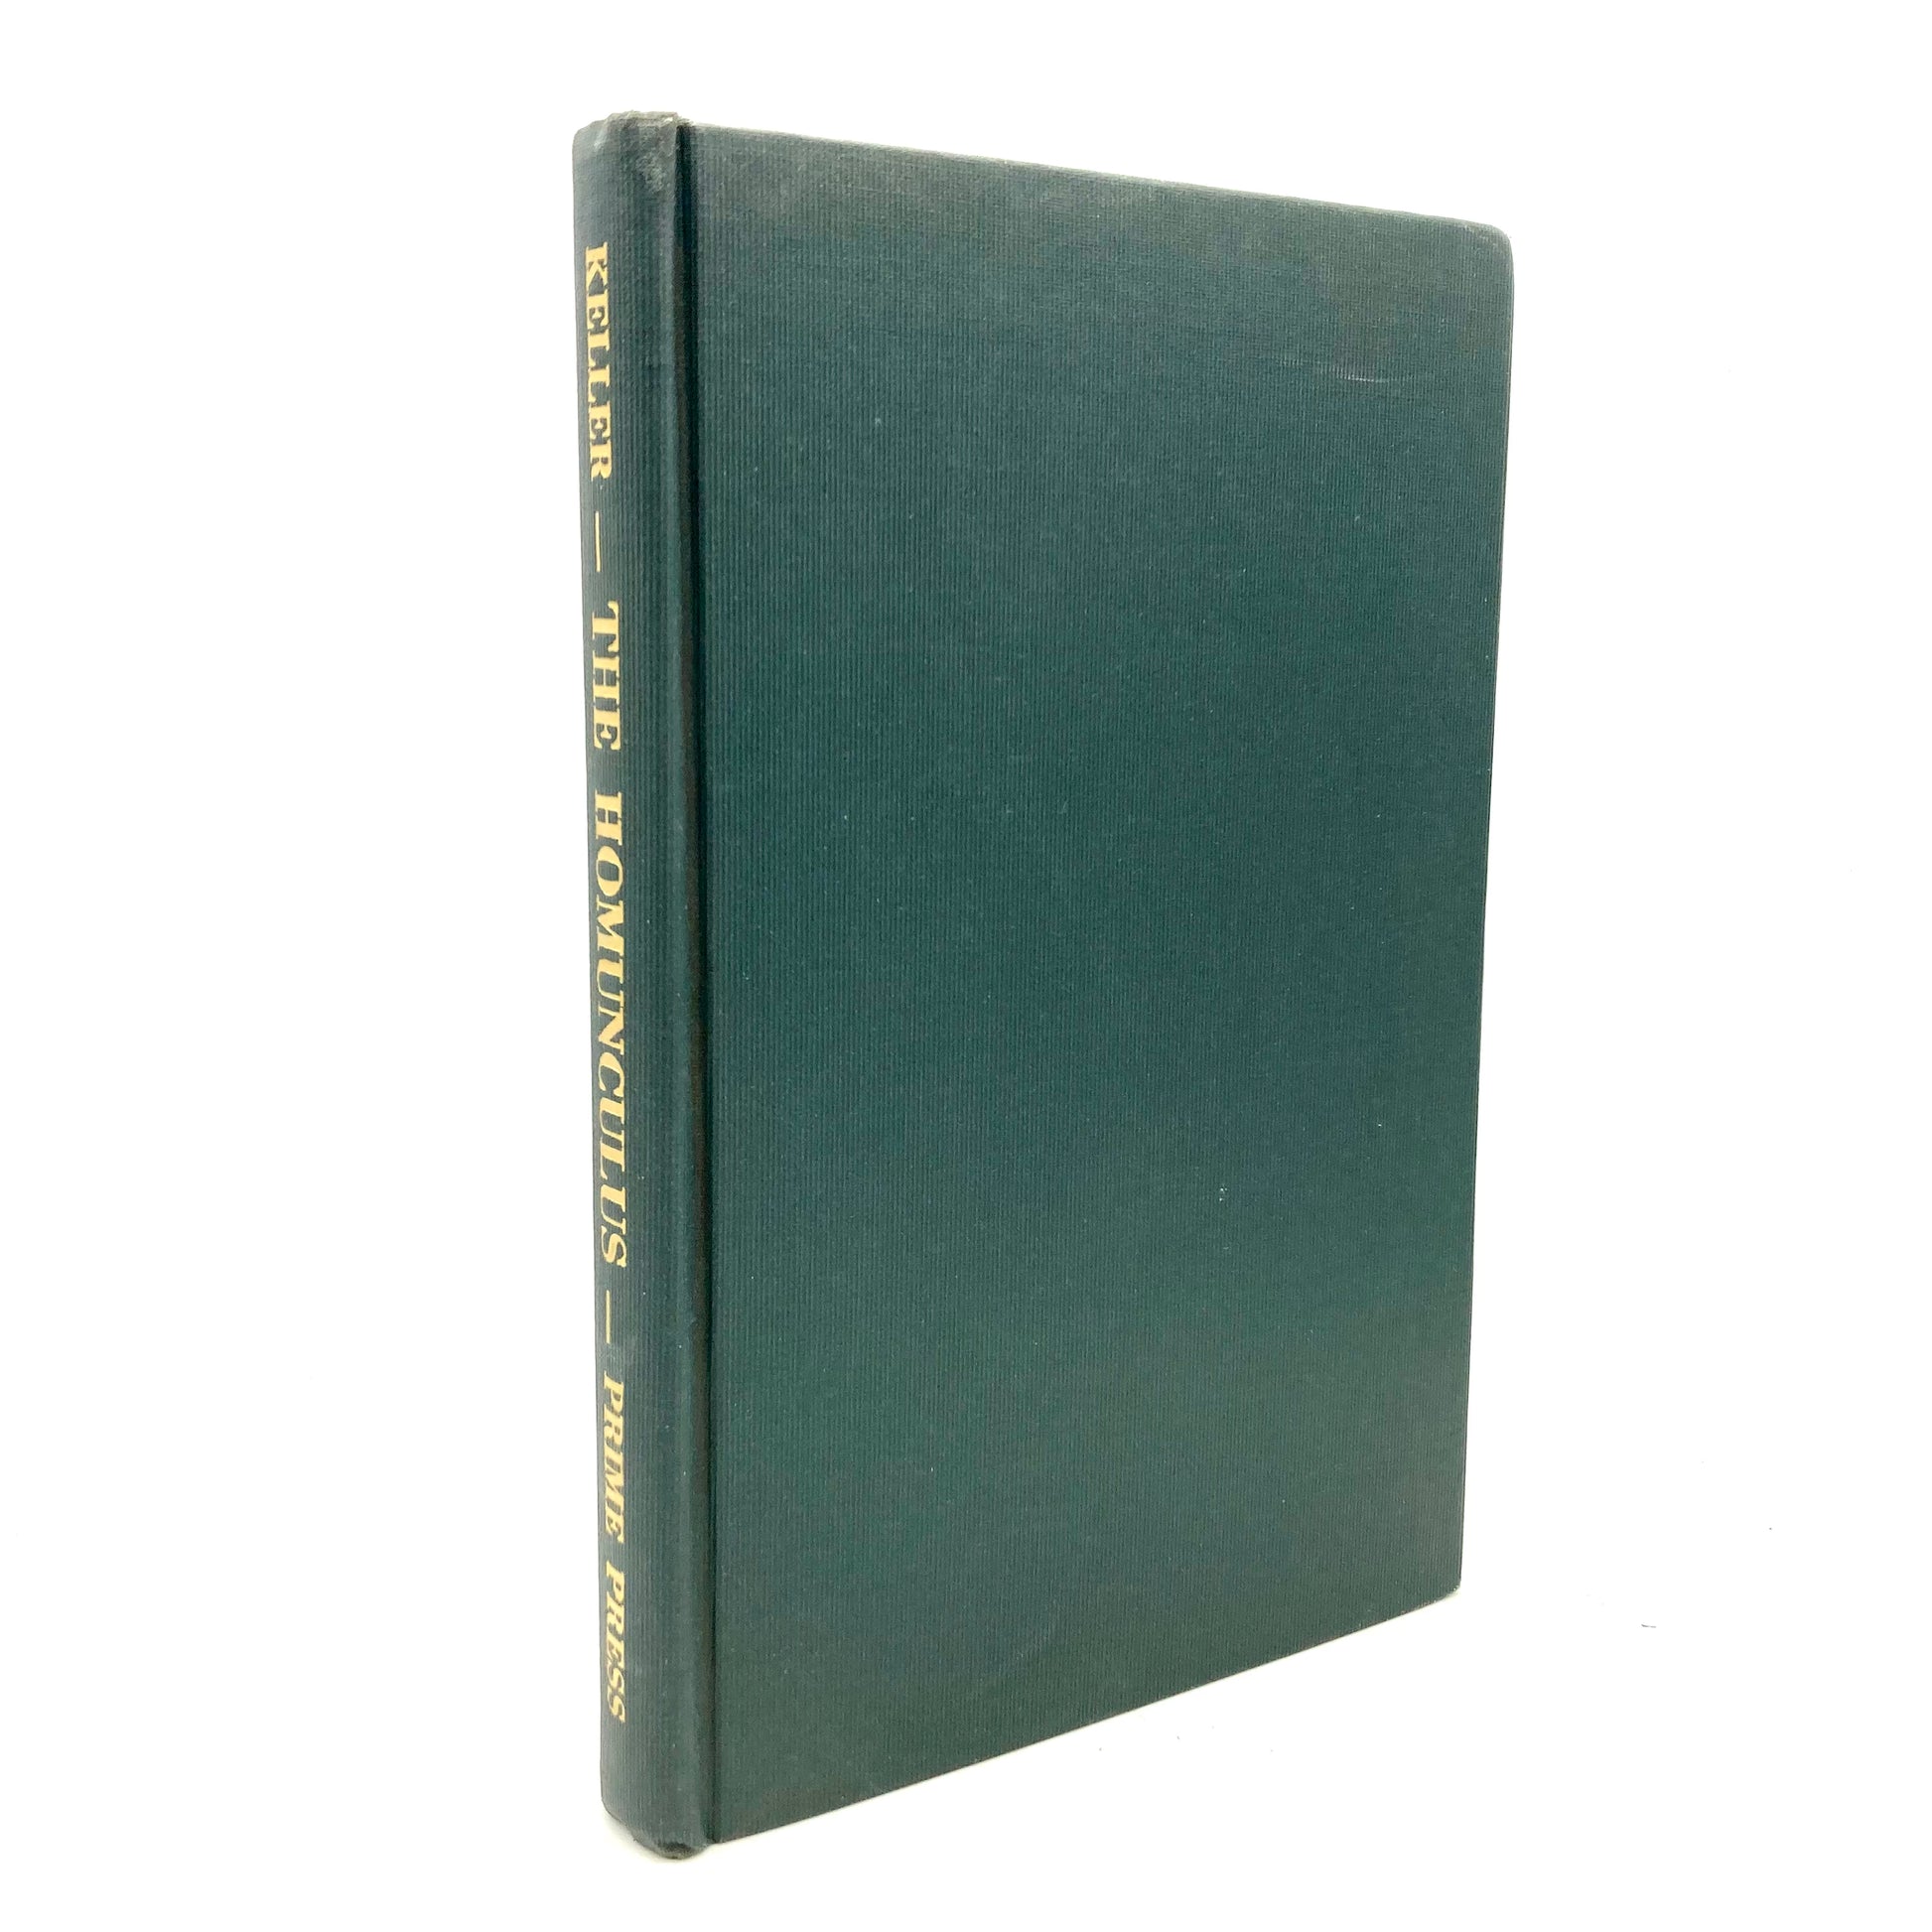 KELLER, David H. “The Homunculus” [Prime Press, 1949] 1st Edition - Buzz Bookstore